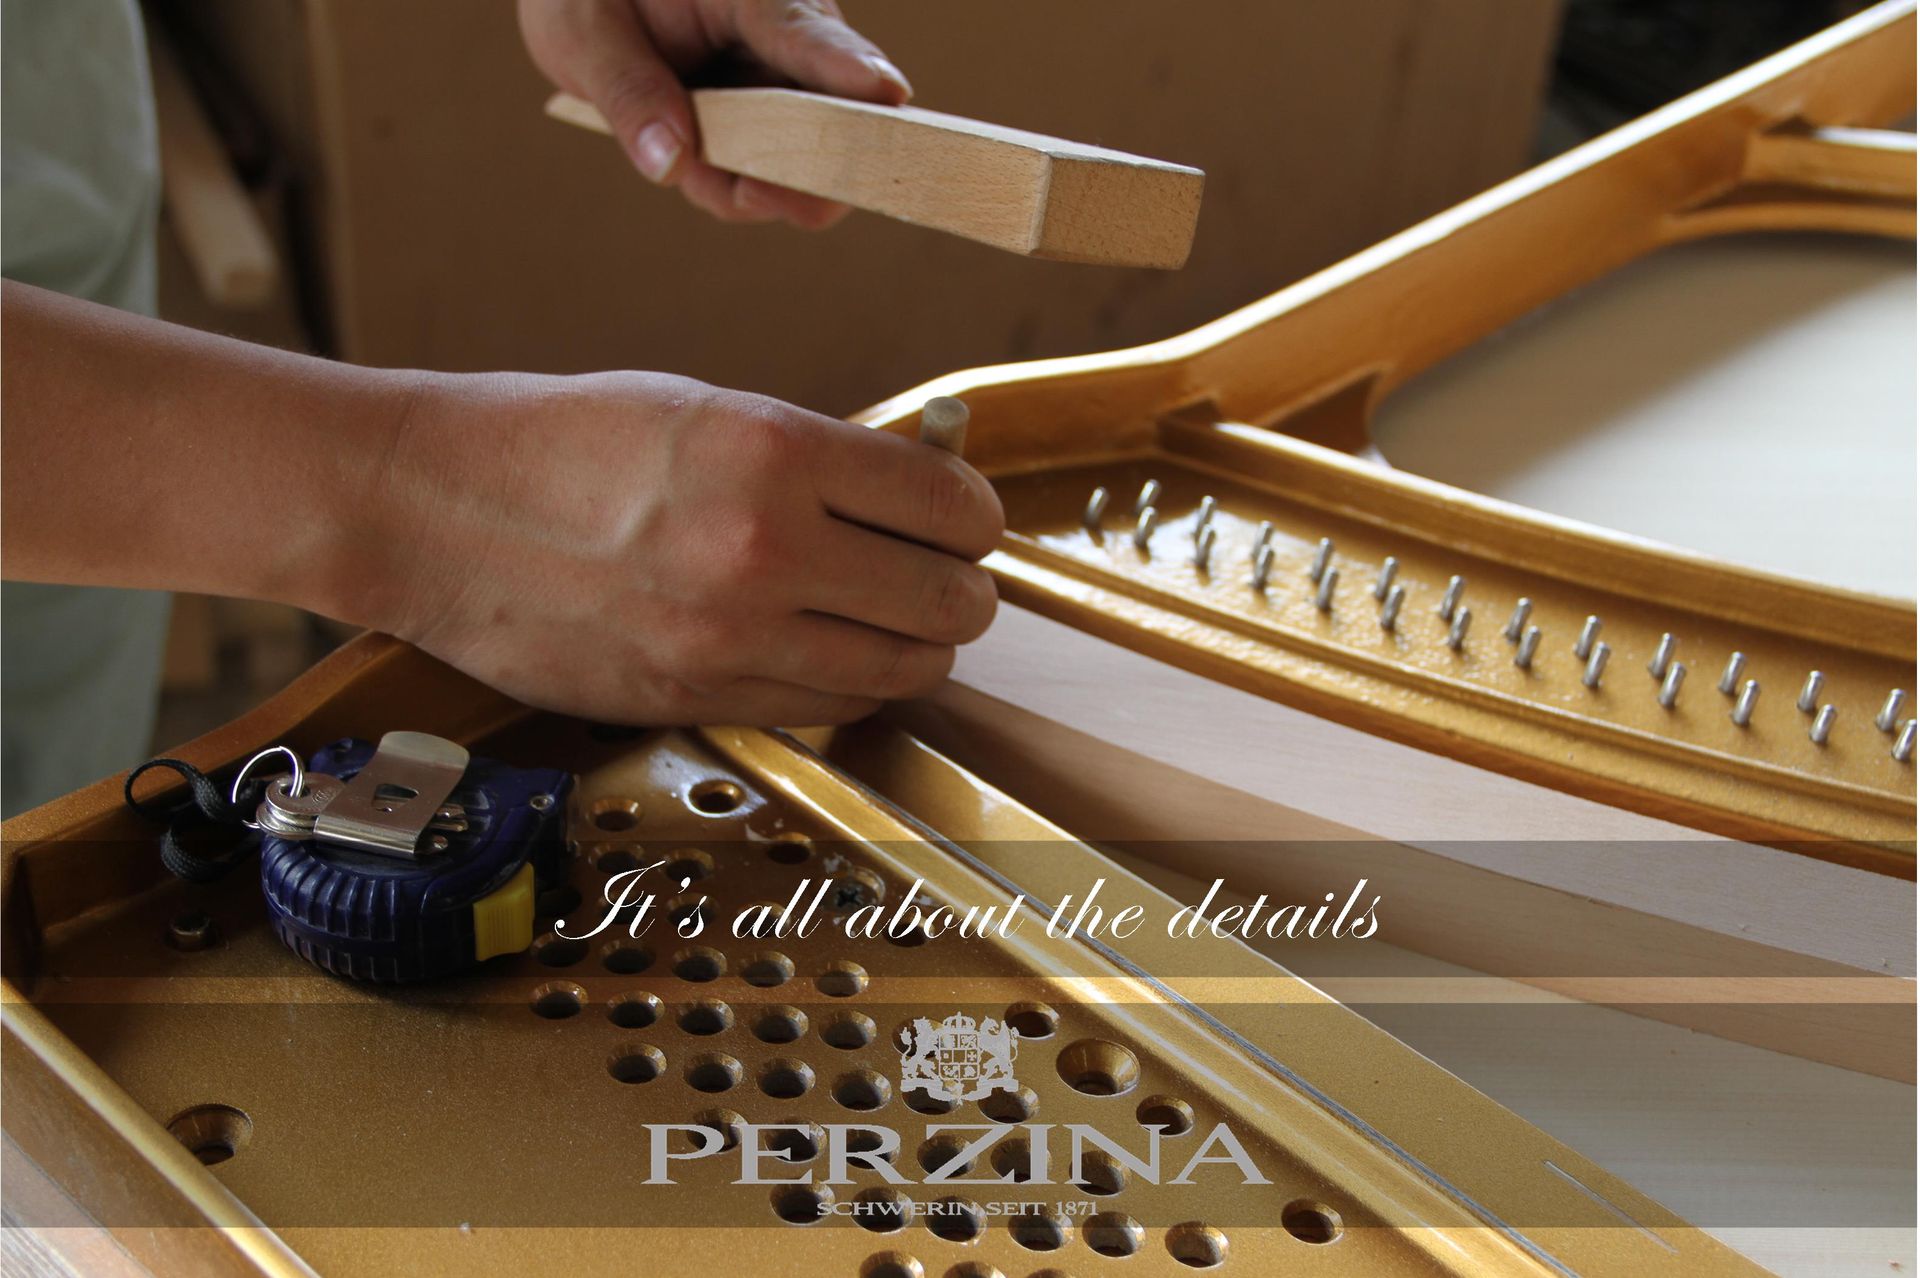 Perzina grand and upright piano - Piano Store in San Francisco, CA | World Class Pianos